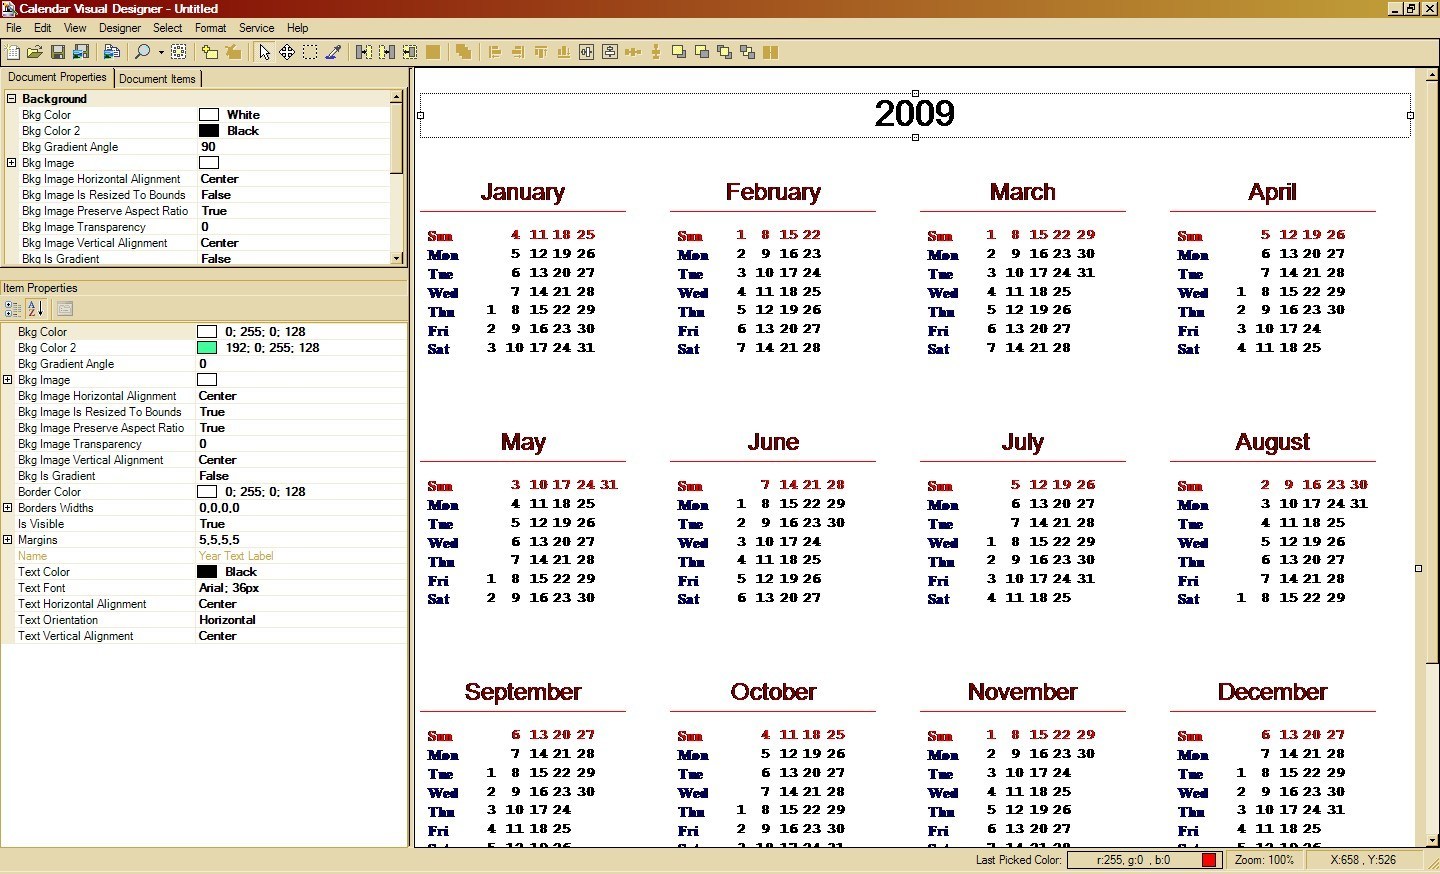 Calendar Visual Designer latest version Get best Windows software